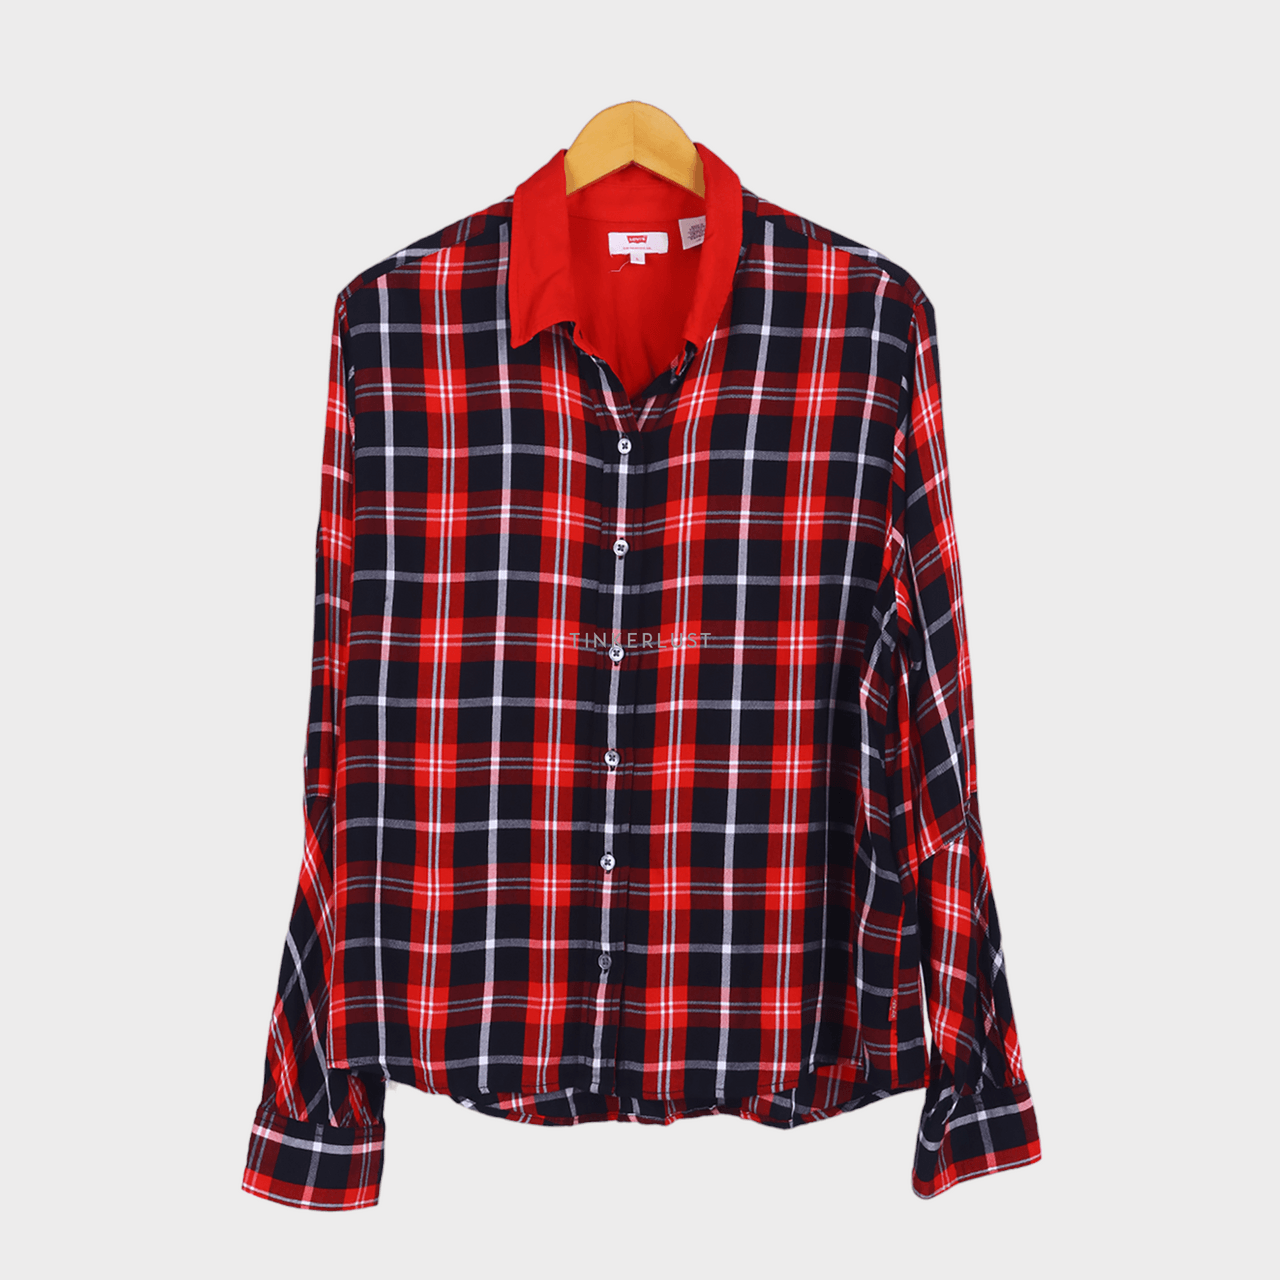 Levi's Black & Red Plaid Shirt